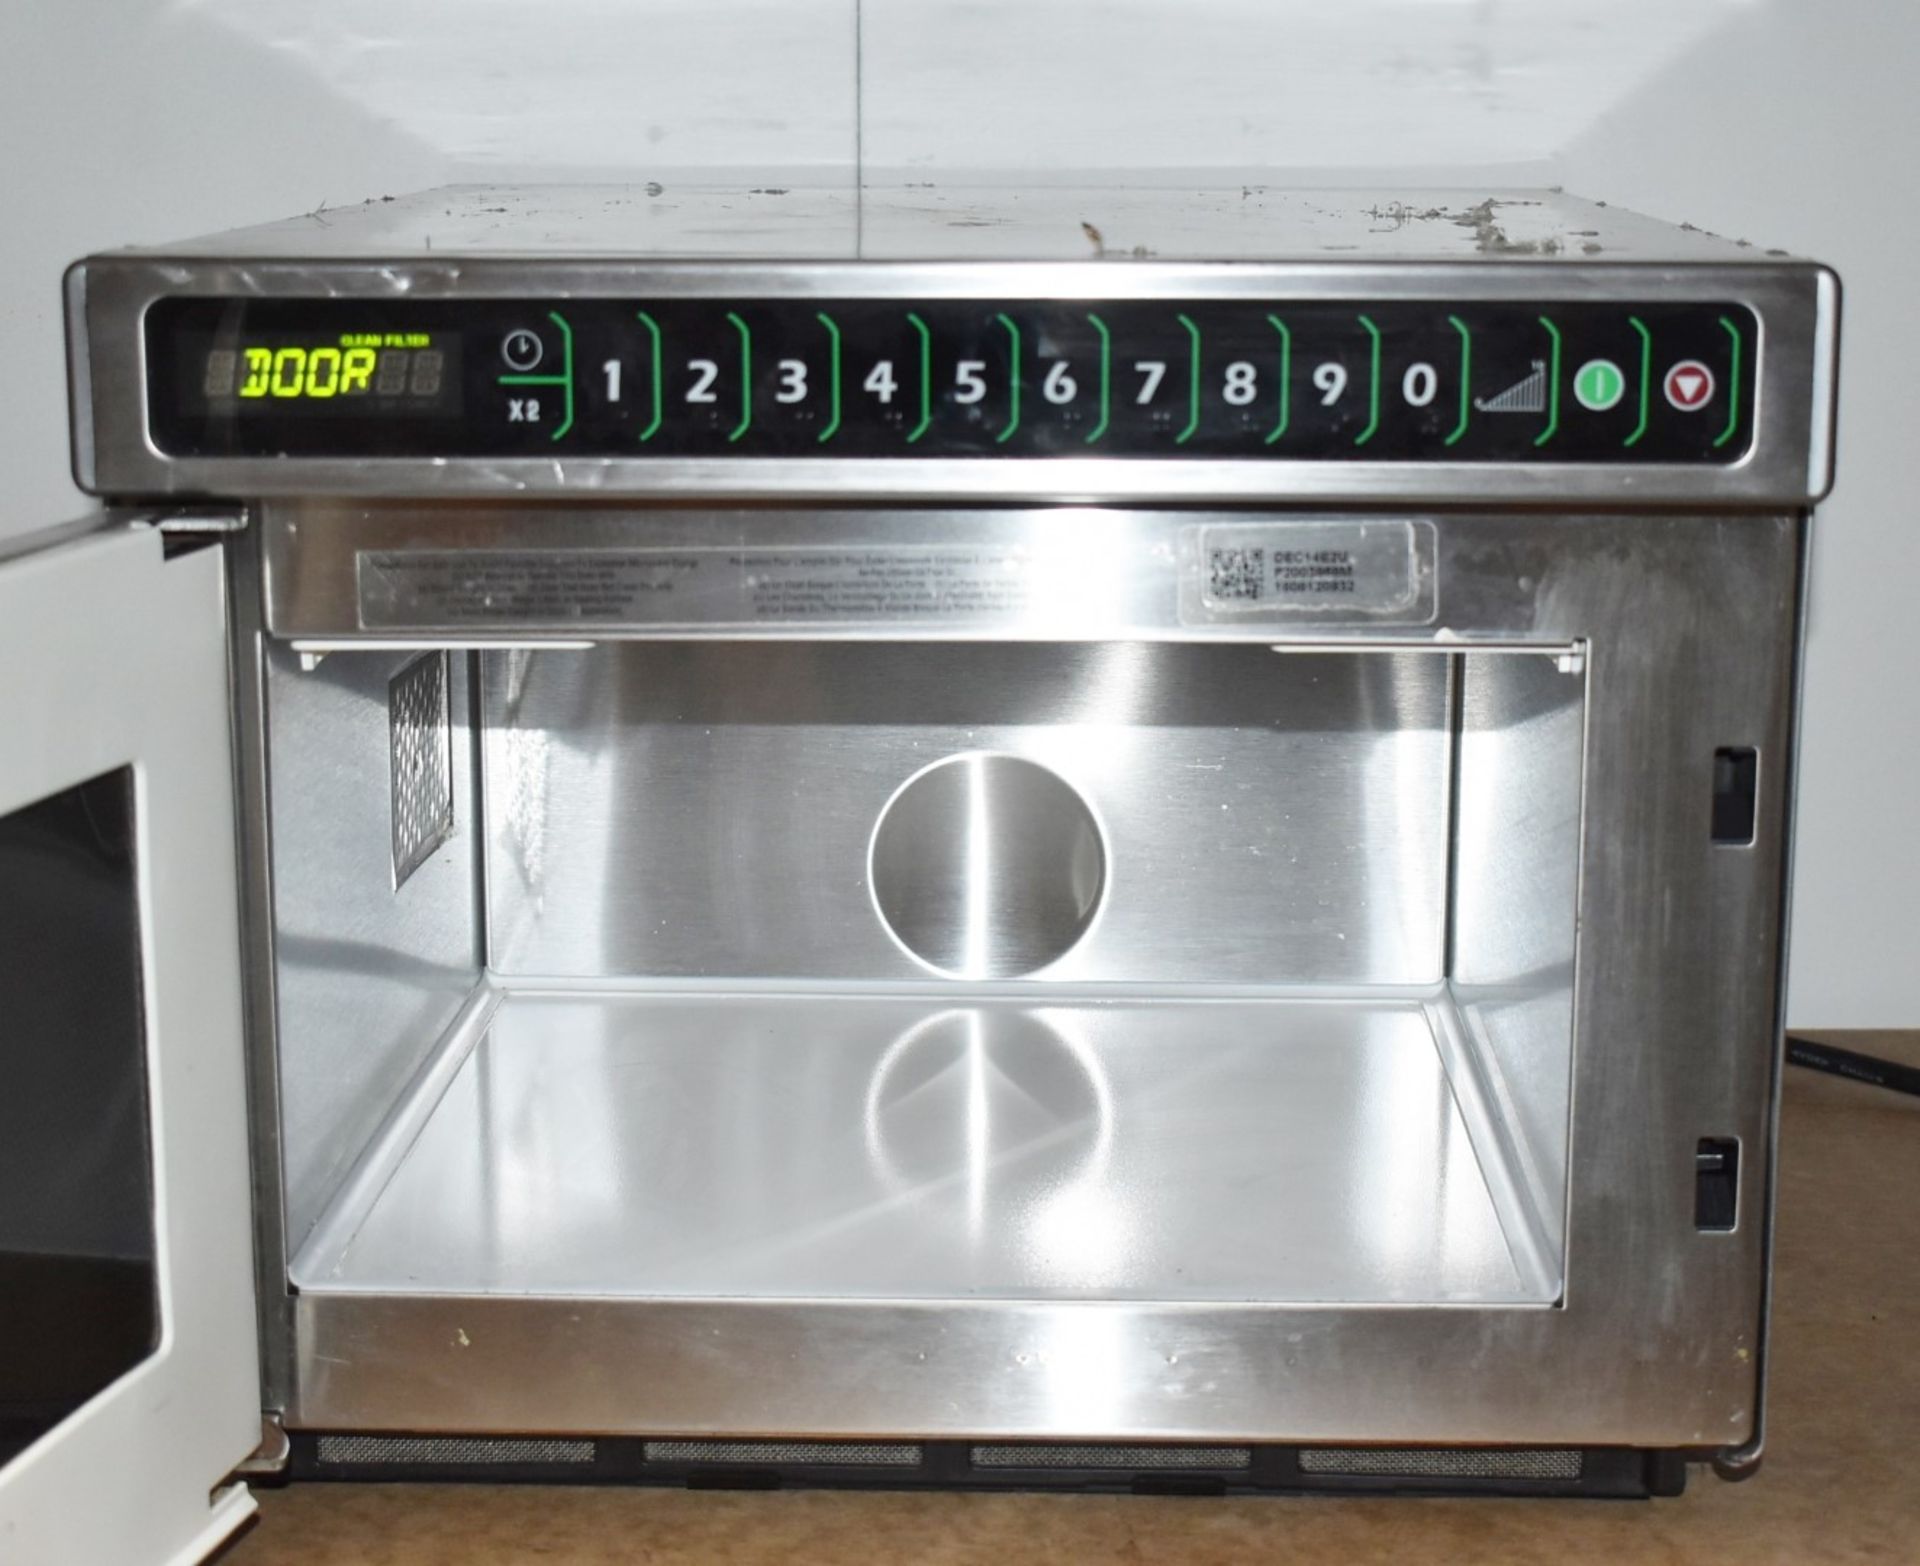 1 x Menumaster Commercial Microwave Oven - Model DEC14E2U - 1.4kW, 13A, 17Ltr - 2018 Model - - Image 9 of 12